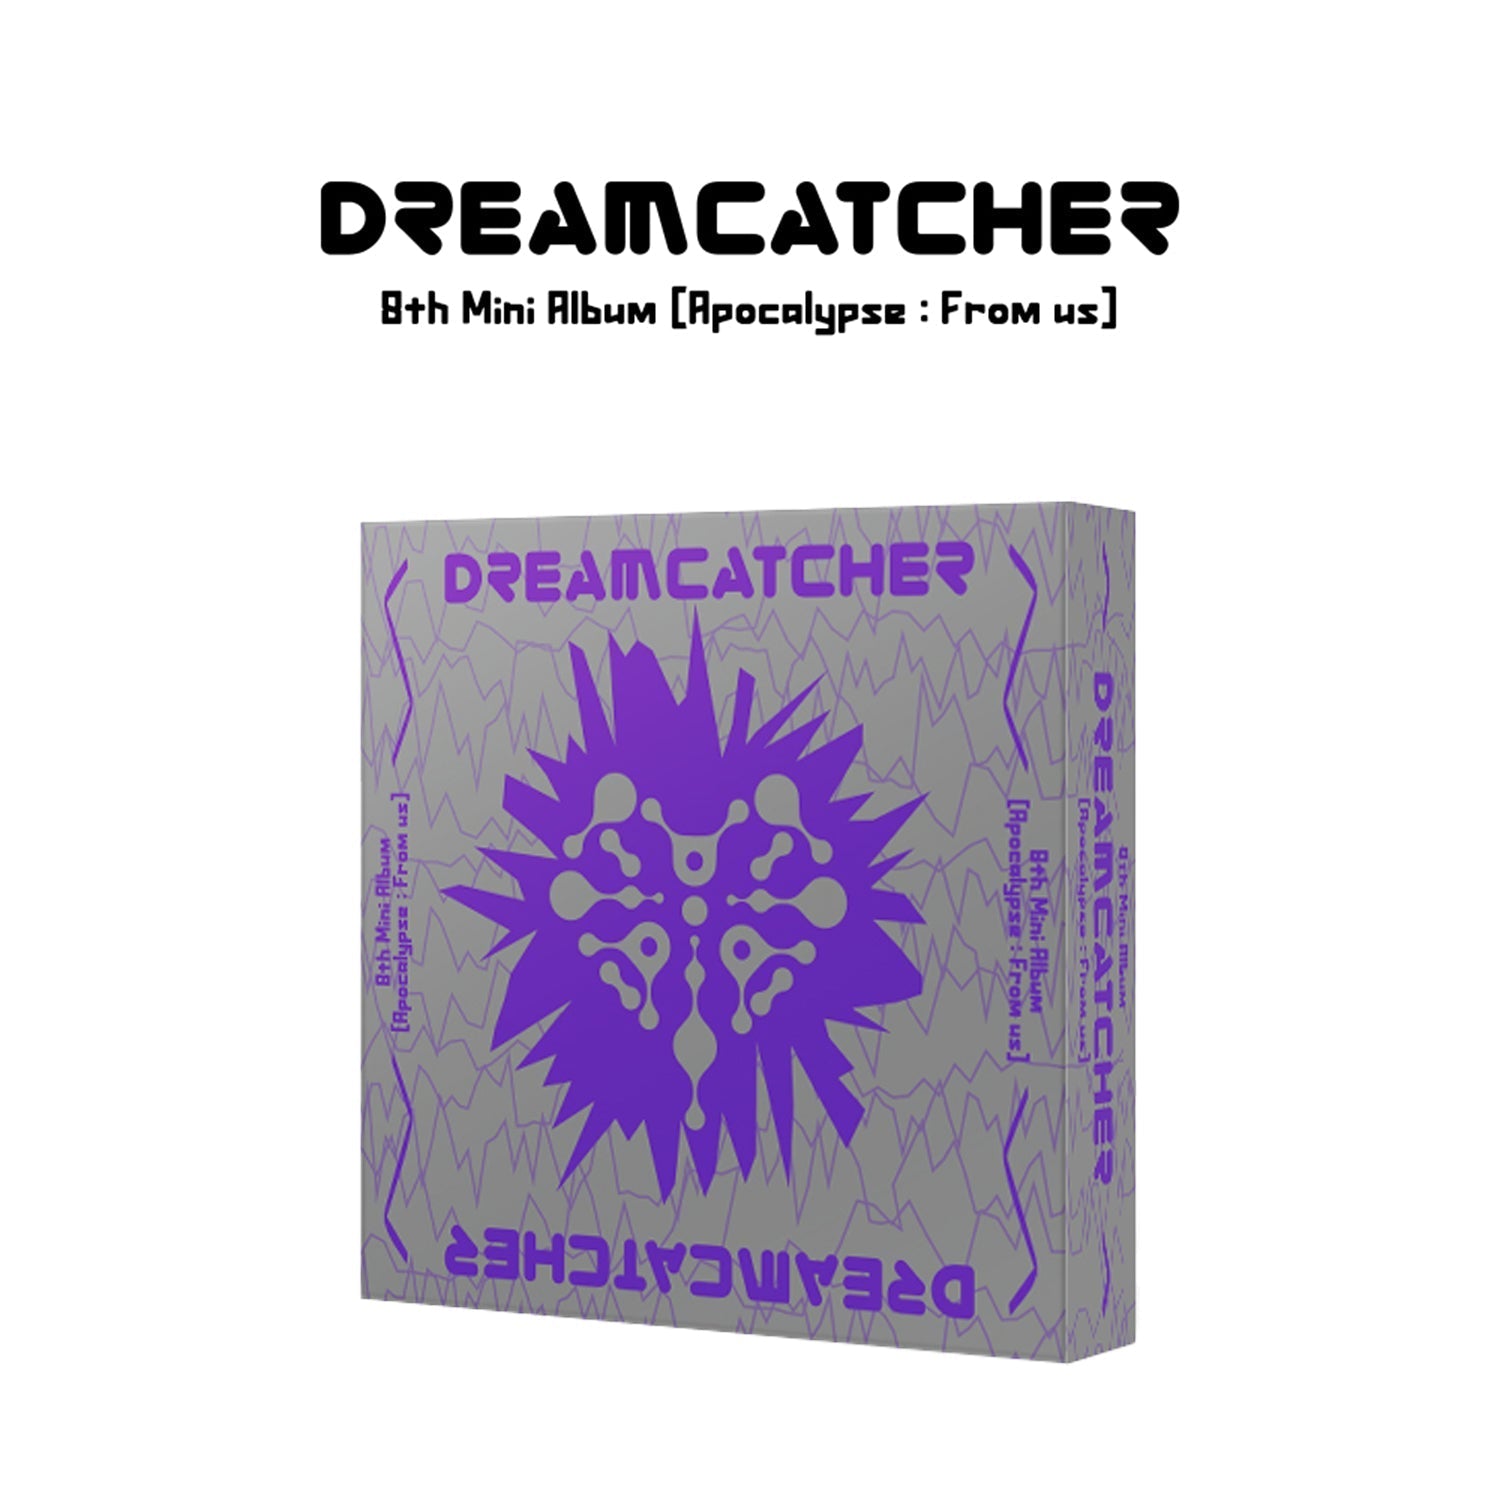 DREAMCATCHER 8TH MINI ALBUM 'APOCALYPSE : FROM US' B VERSION COVER